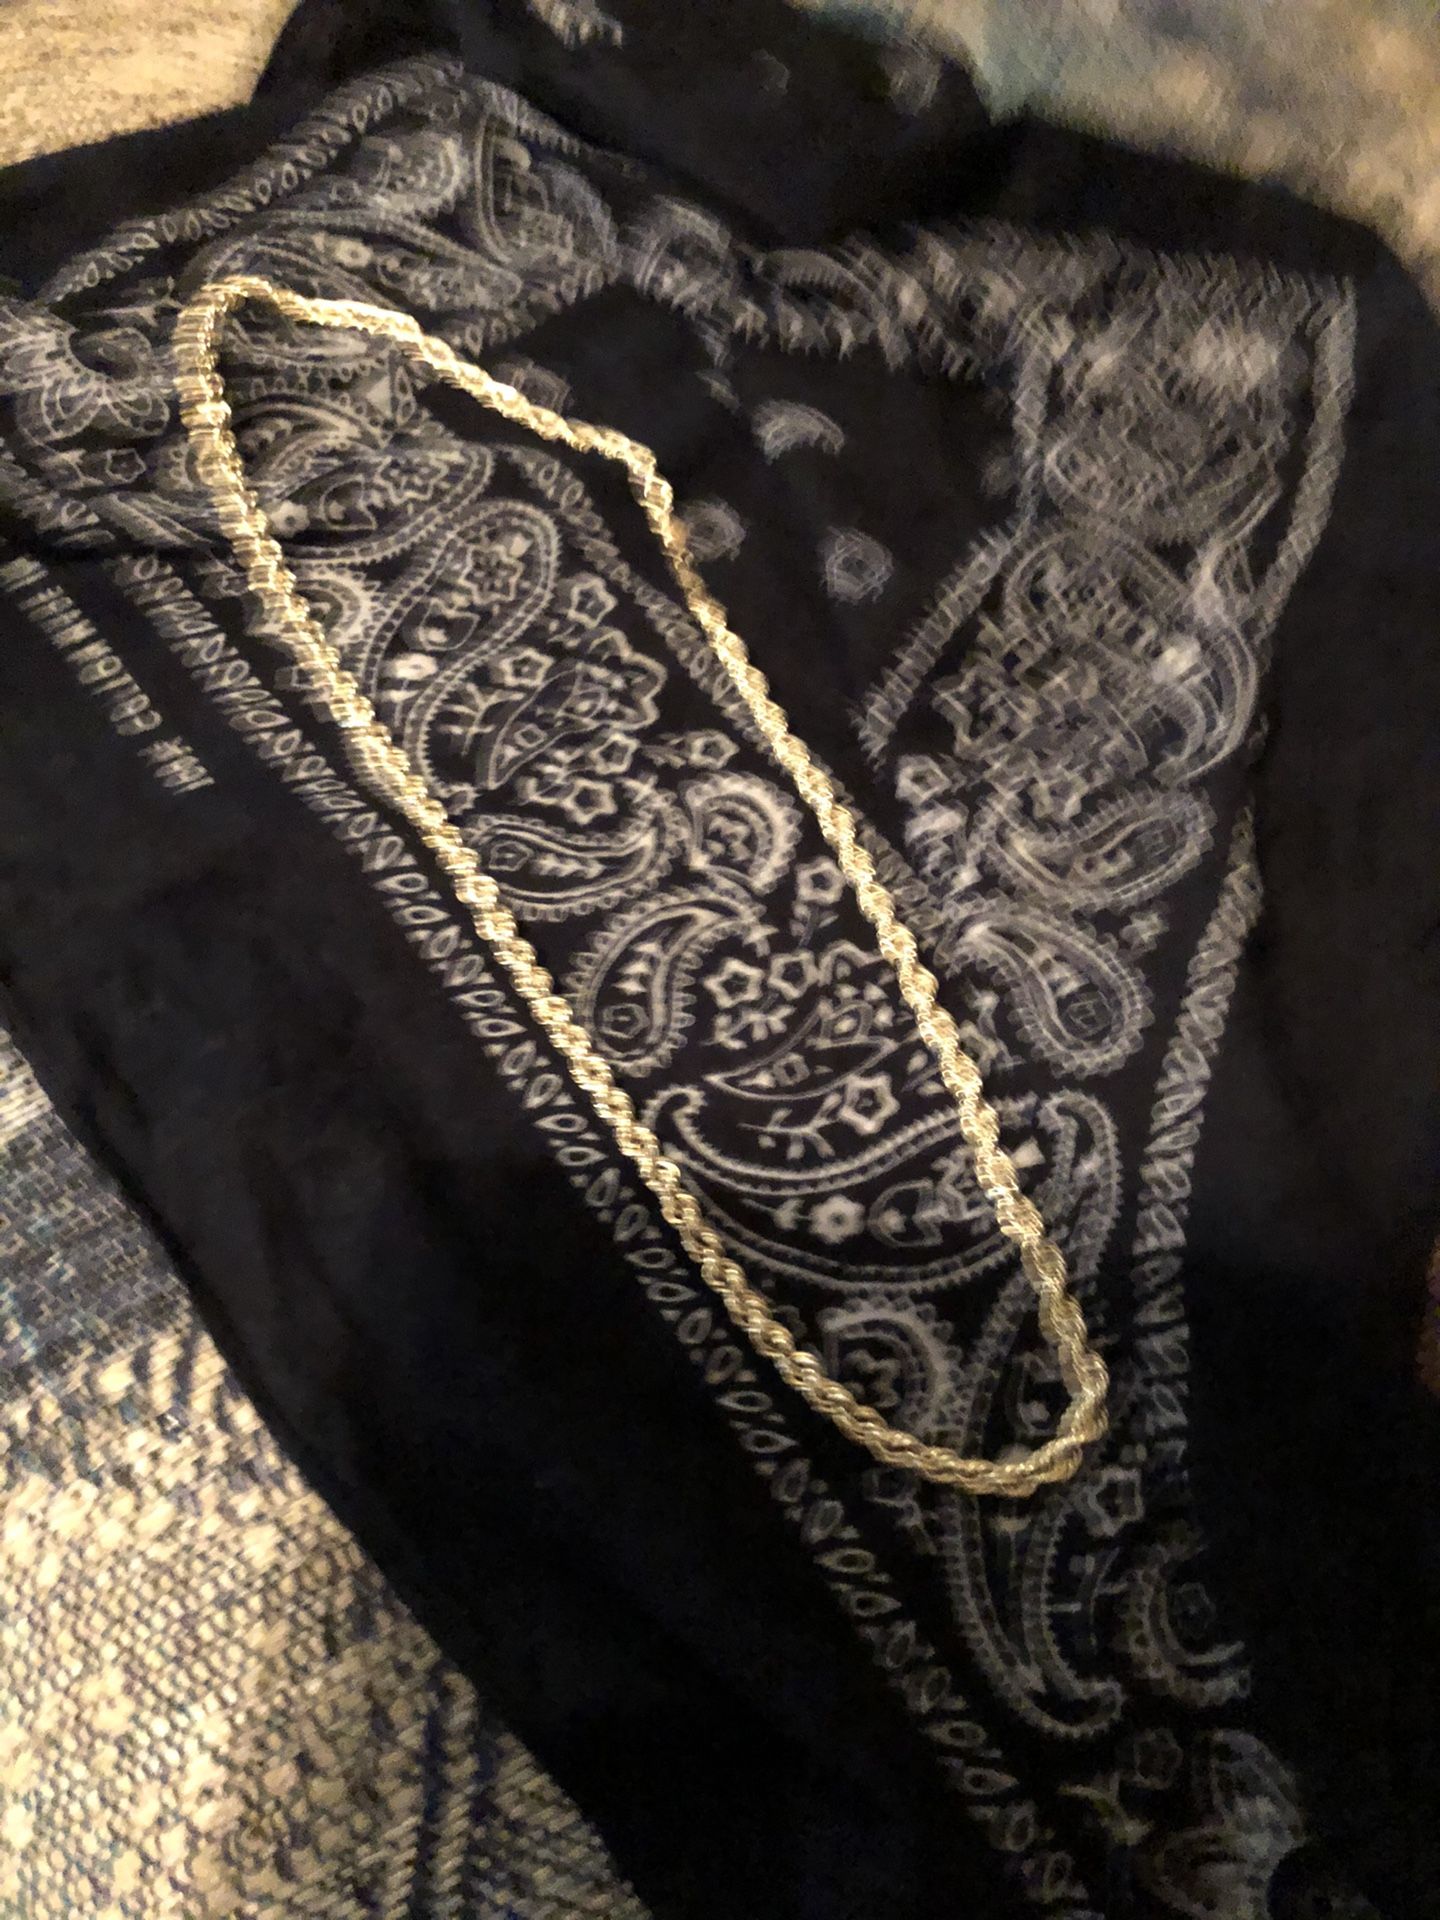 10k gold necklace